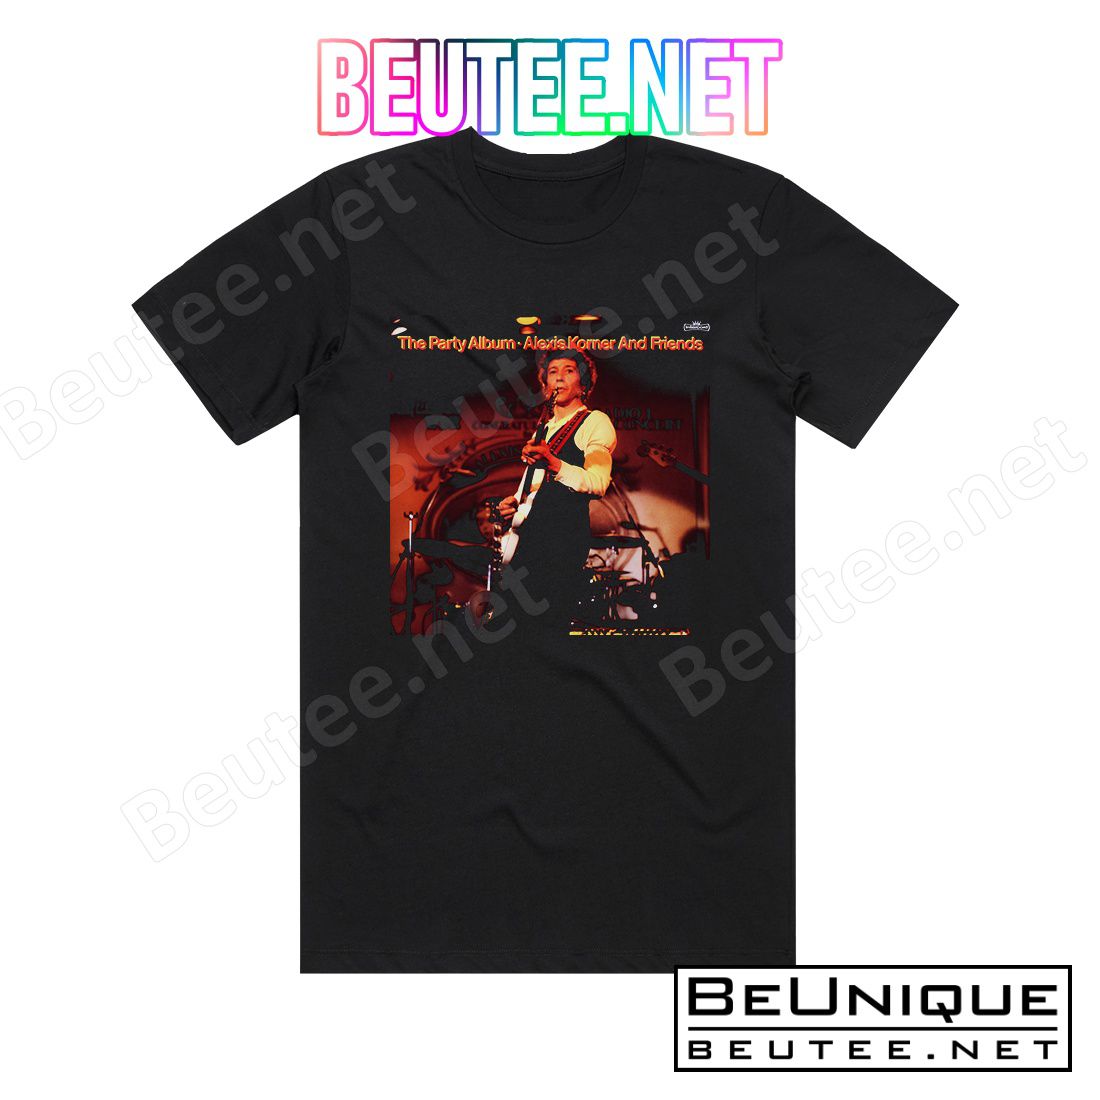 Alexis Korner and Friends The Party Album Album Cover T-Shirt